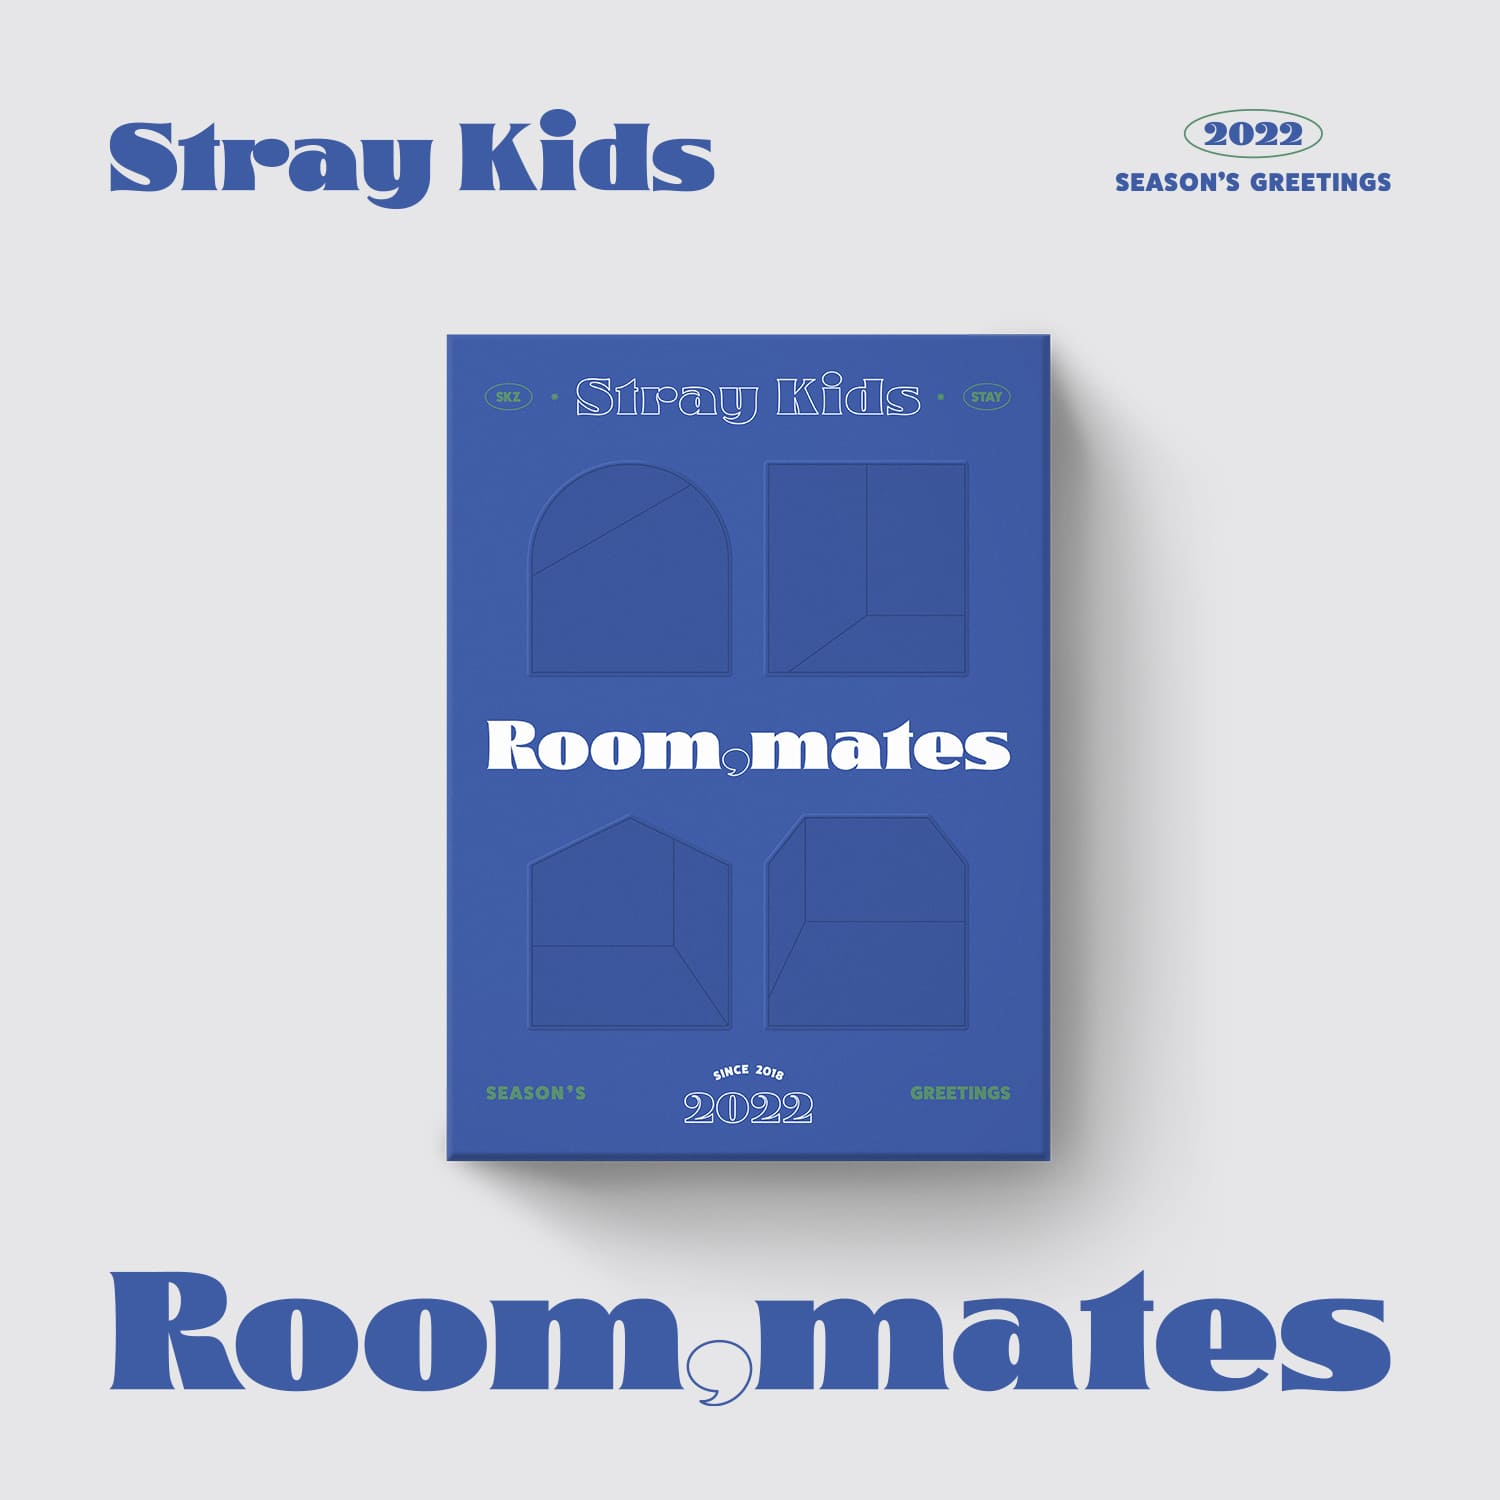 Stray Kids 2022 Season’s Greetings [Room,mates]